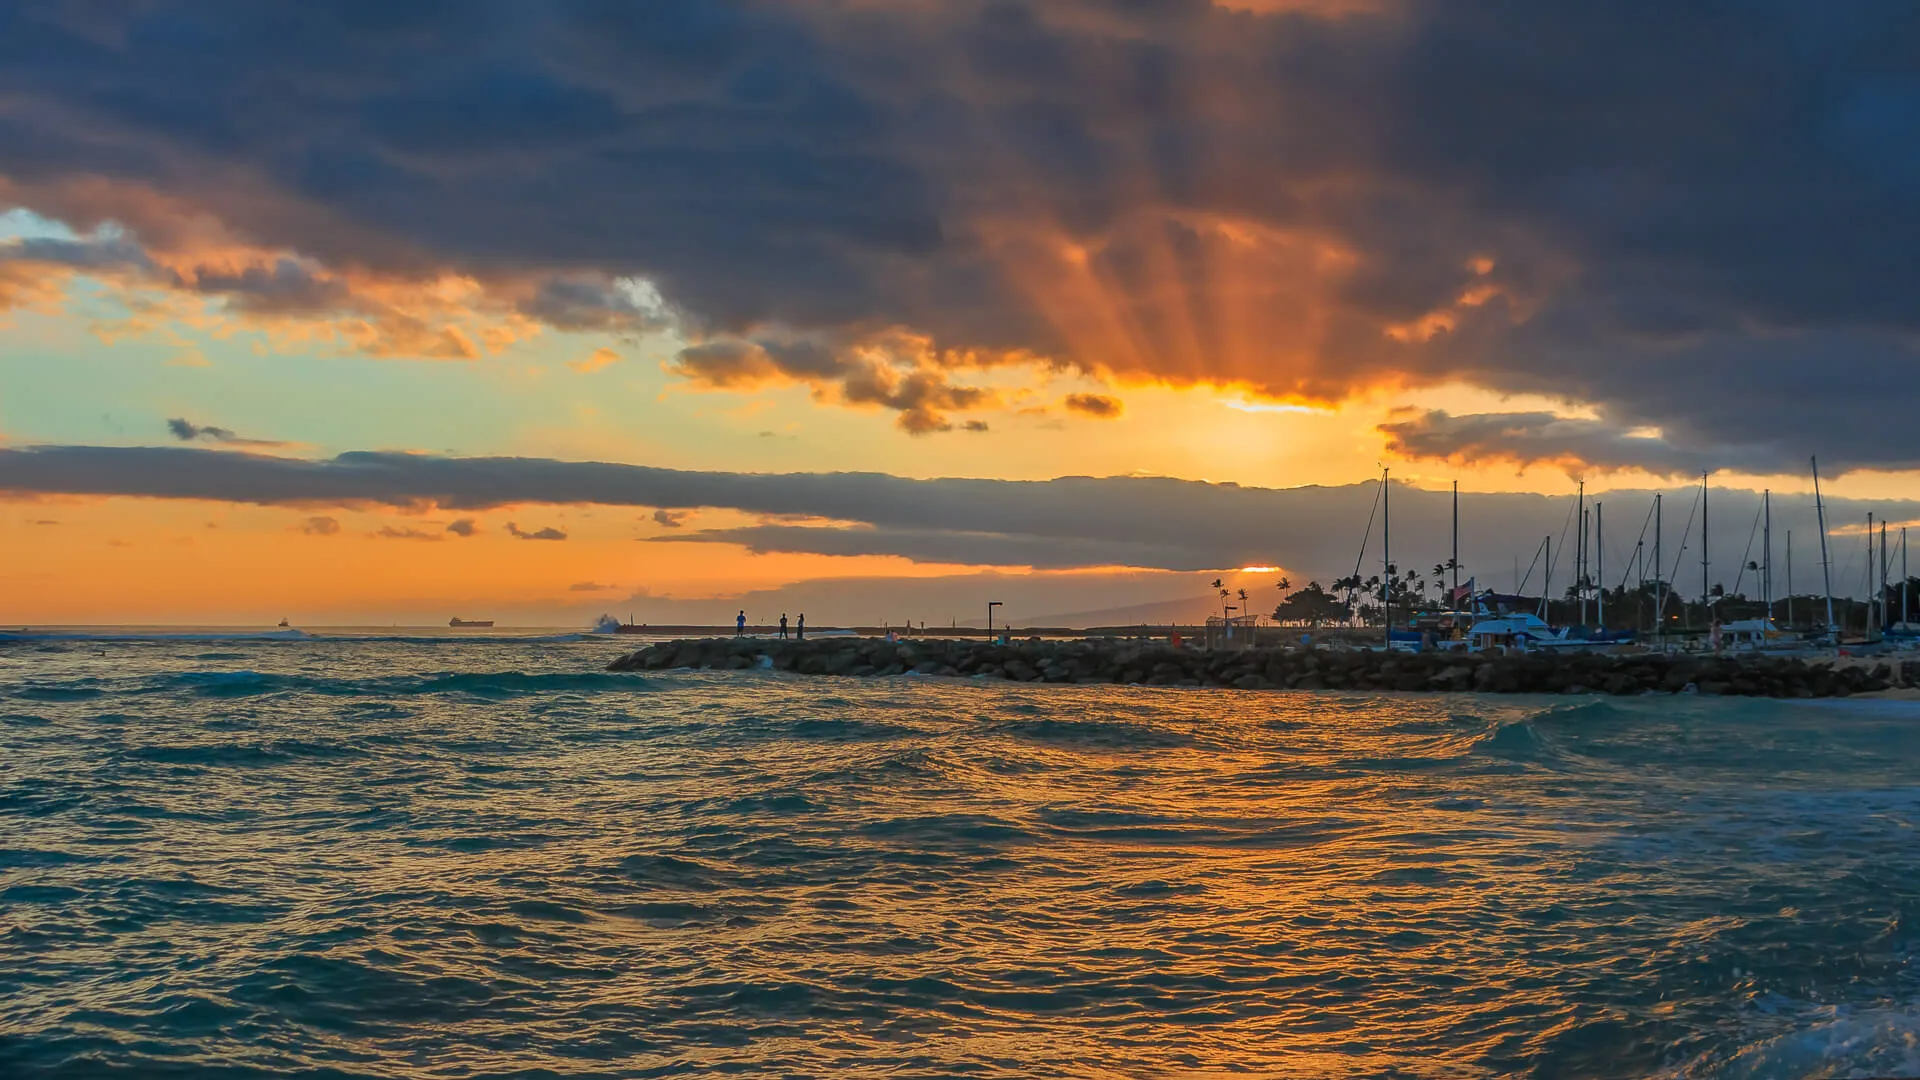 Stunning sunset with sunbeams shining through storm clouds in Waipahu, Oahu, Hawaii - Image.